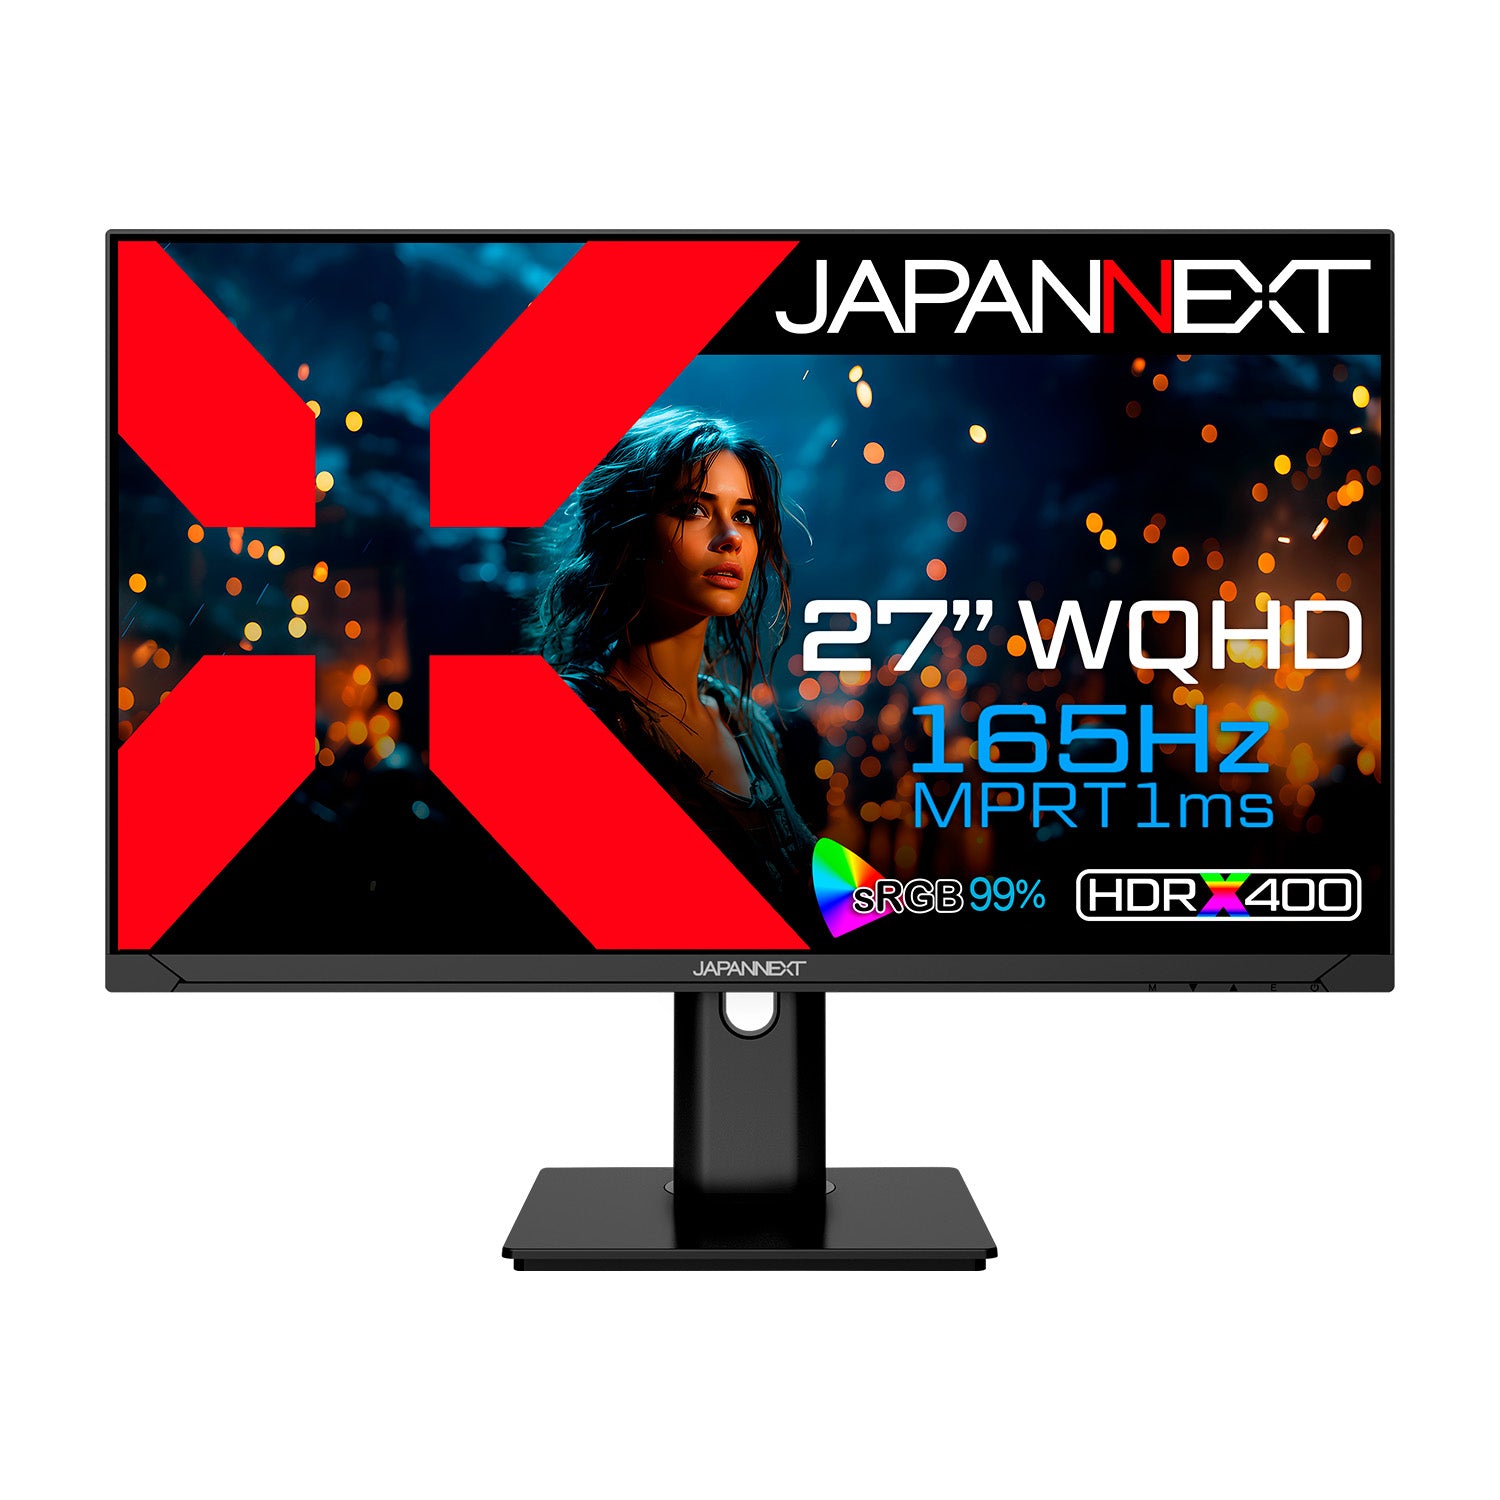 JAPANNEXT 27インチ TNパネル搭載 165Hz対応 WQHD(2560x1440)解像度 